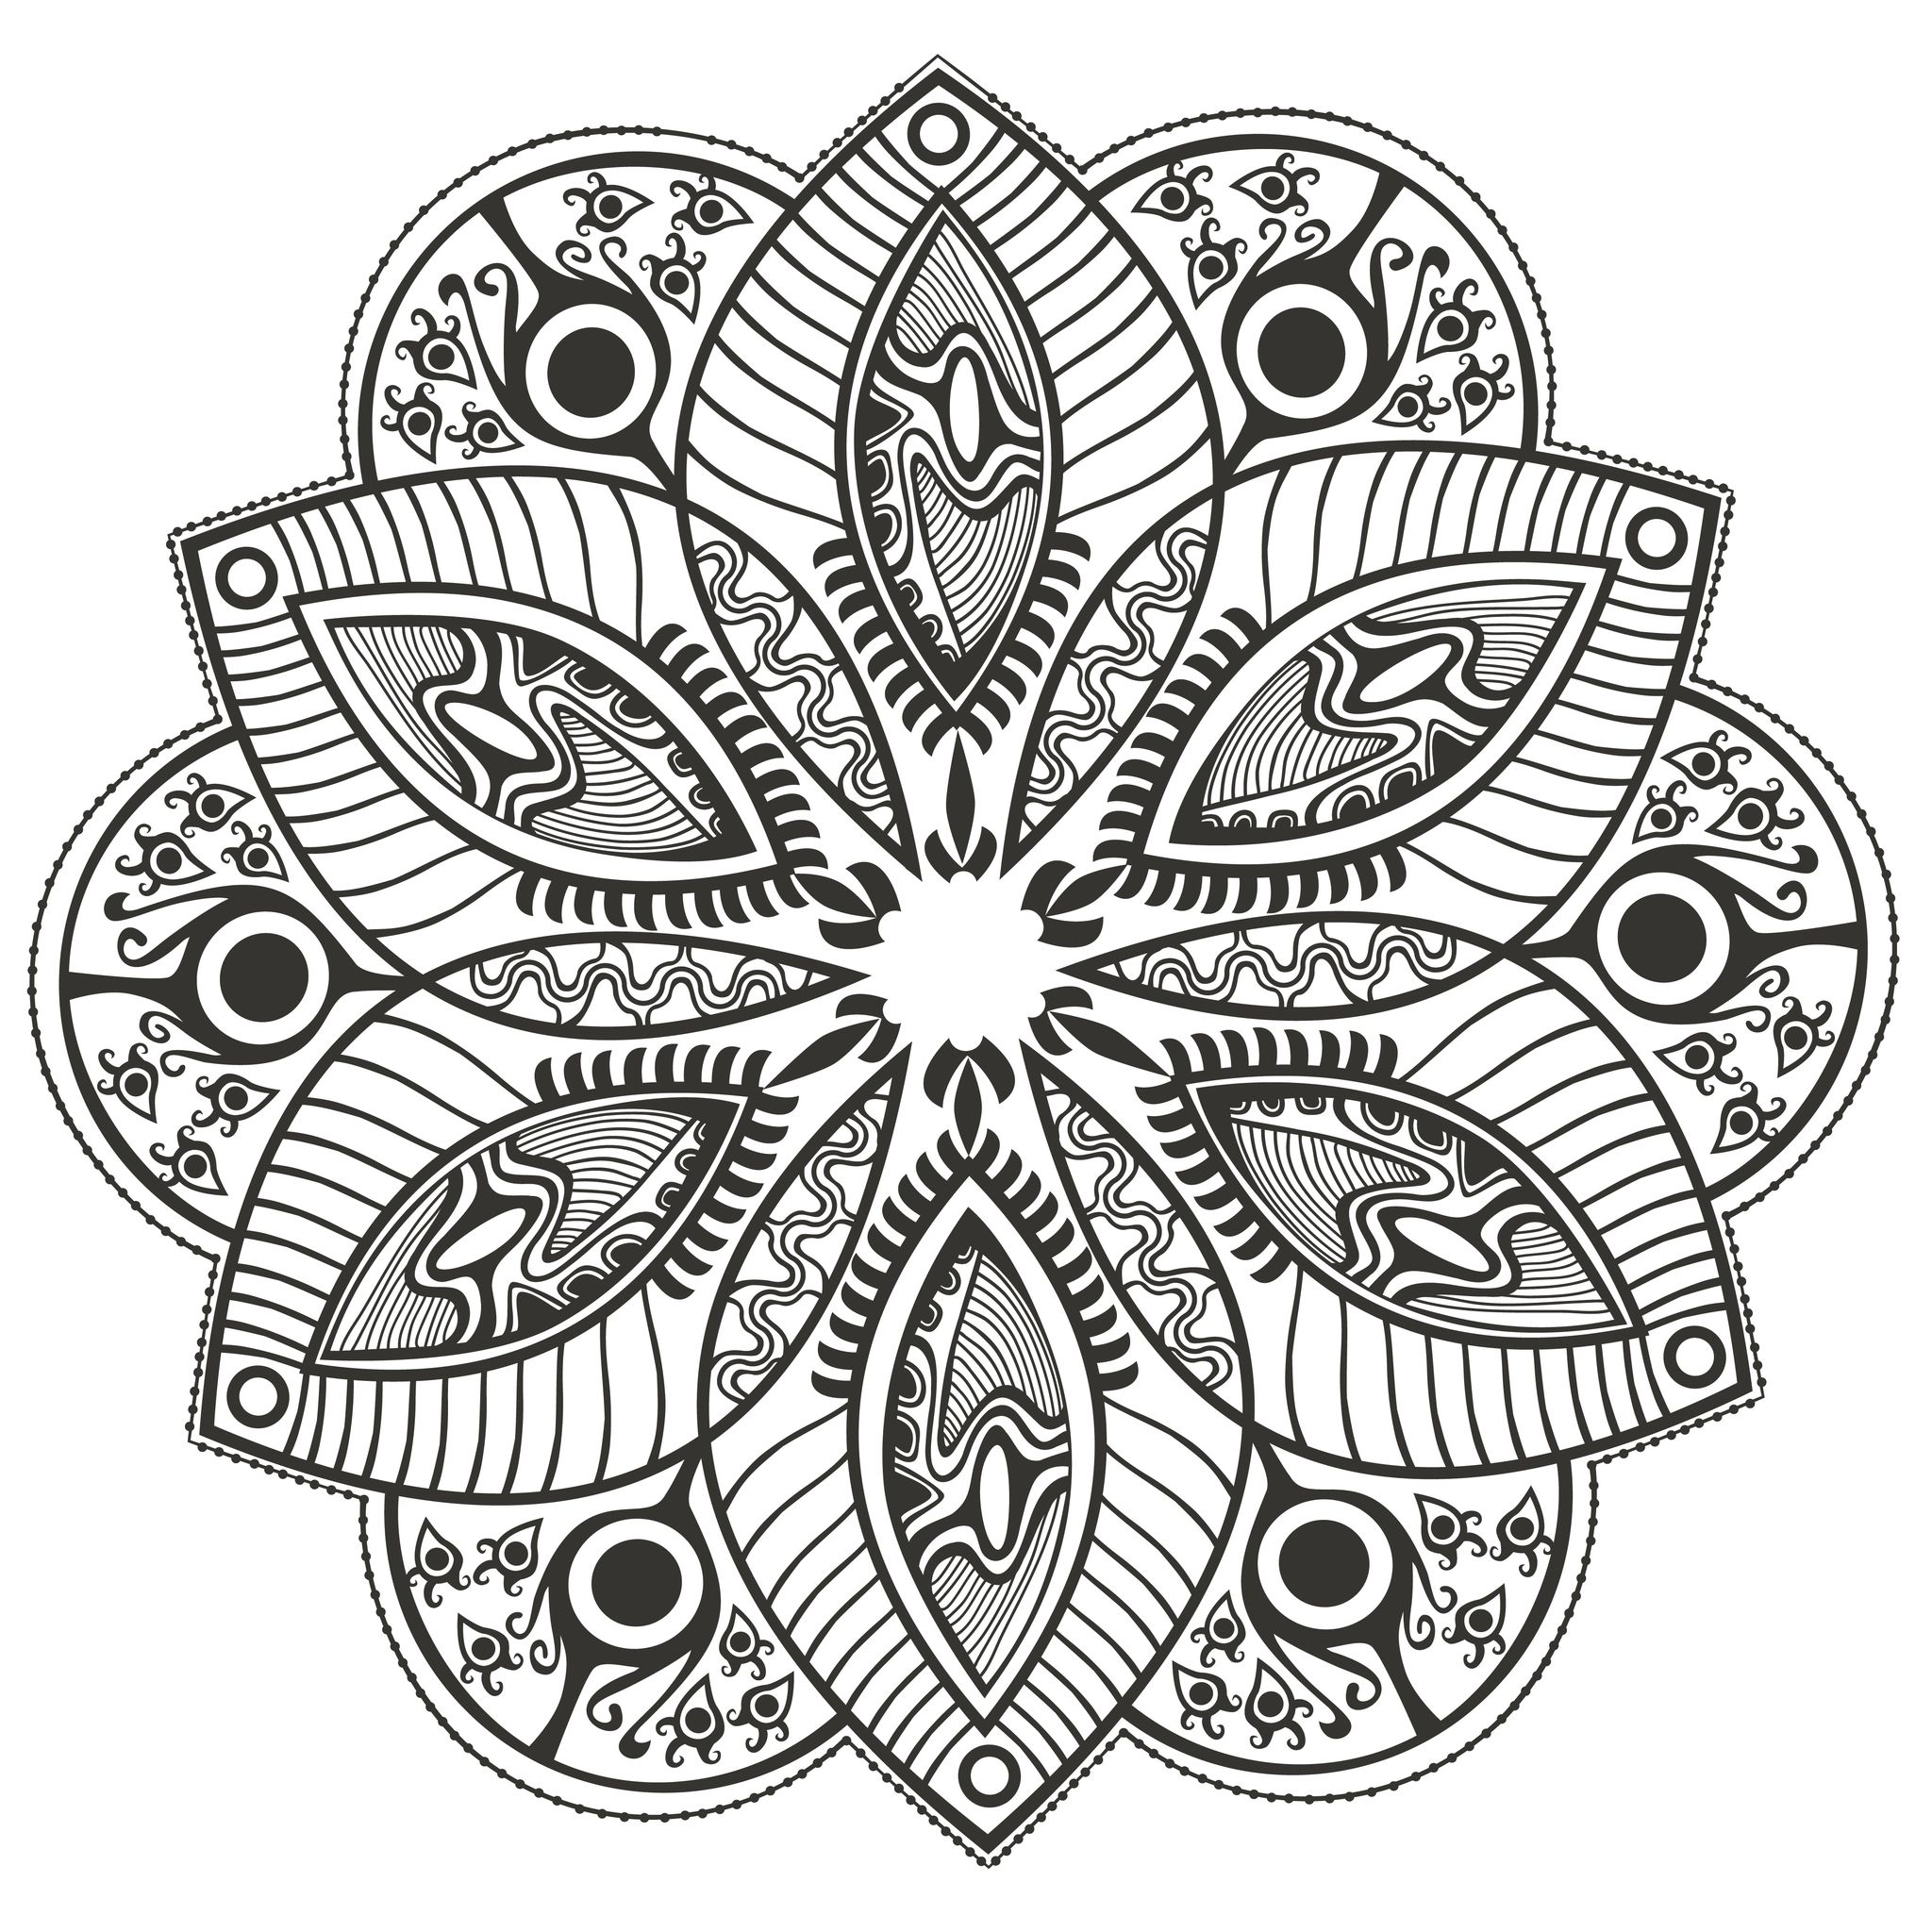 Mandala fleur originale par markovka - Mandalas - Coloriages difficiles ...